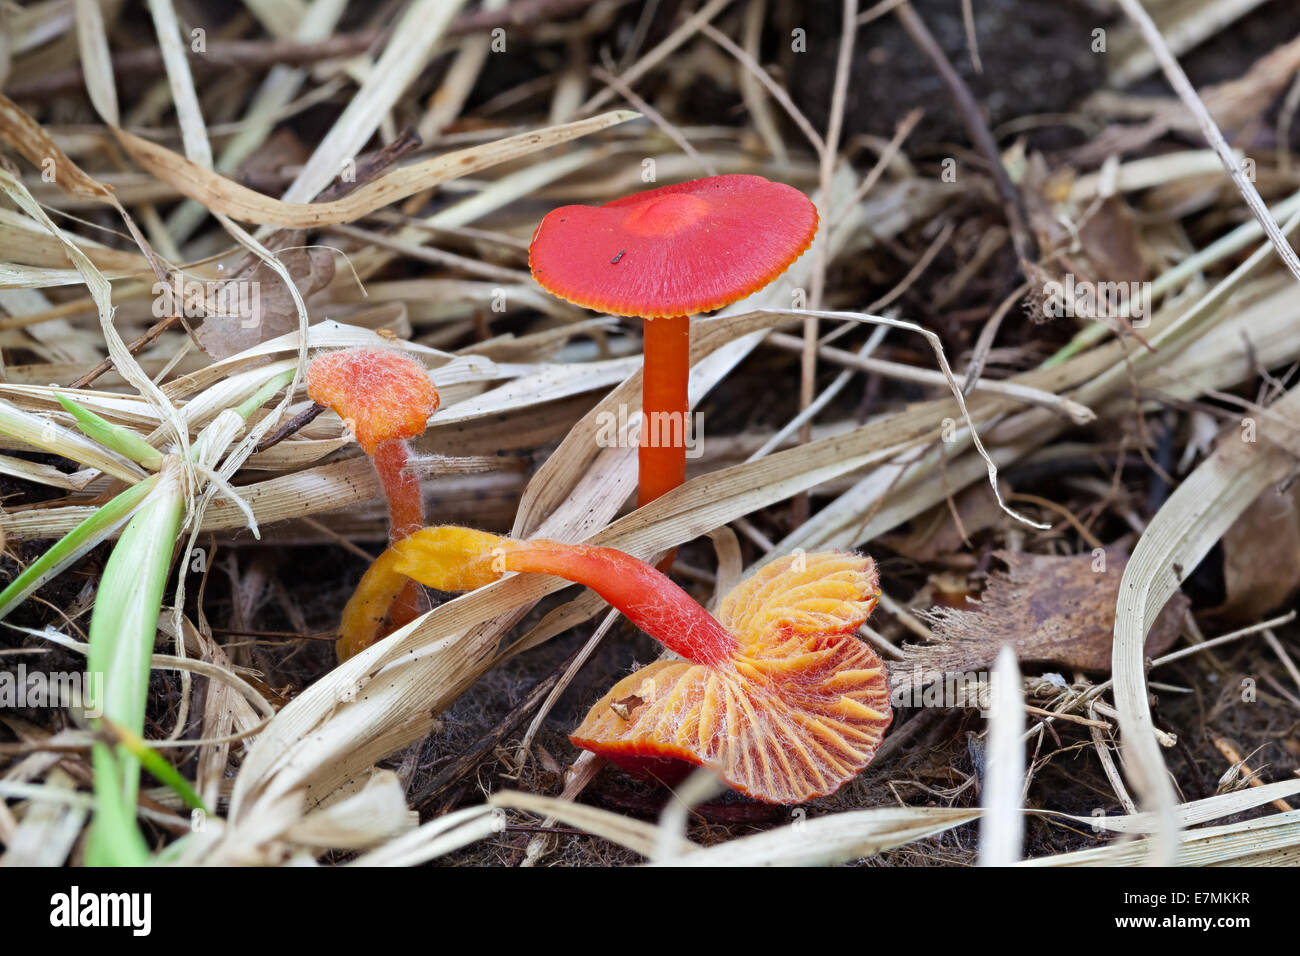 Scarlet waxcap mushroom Stock Photo